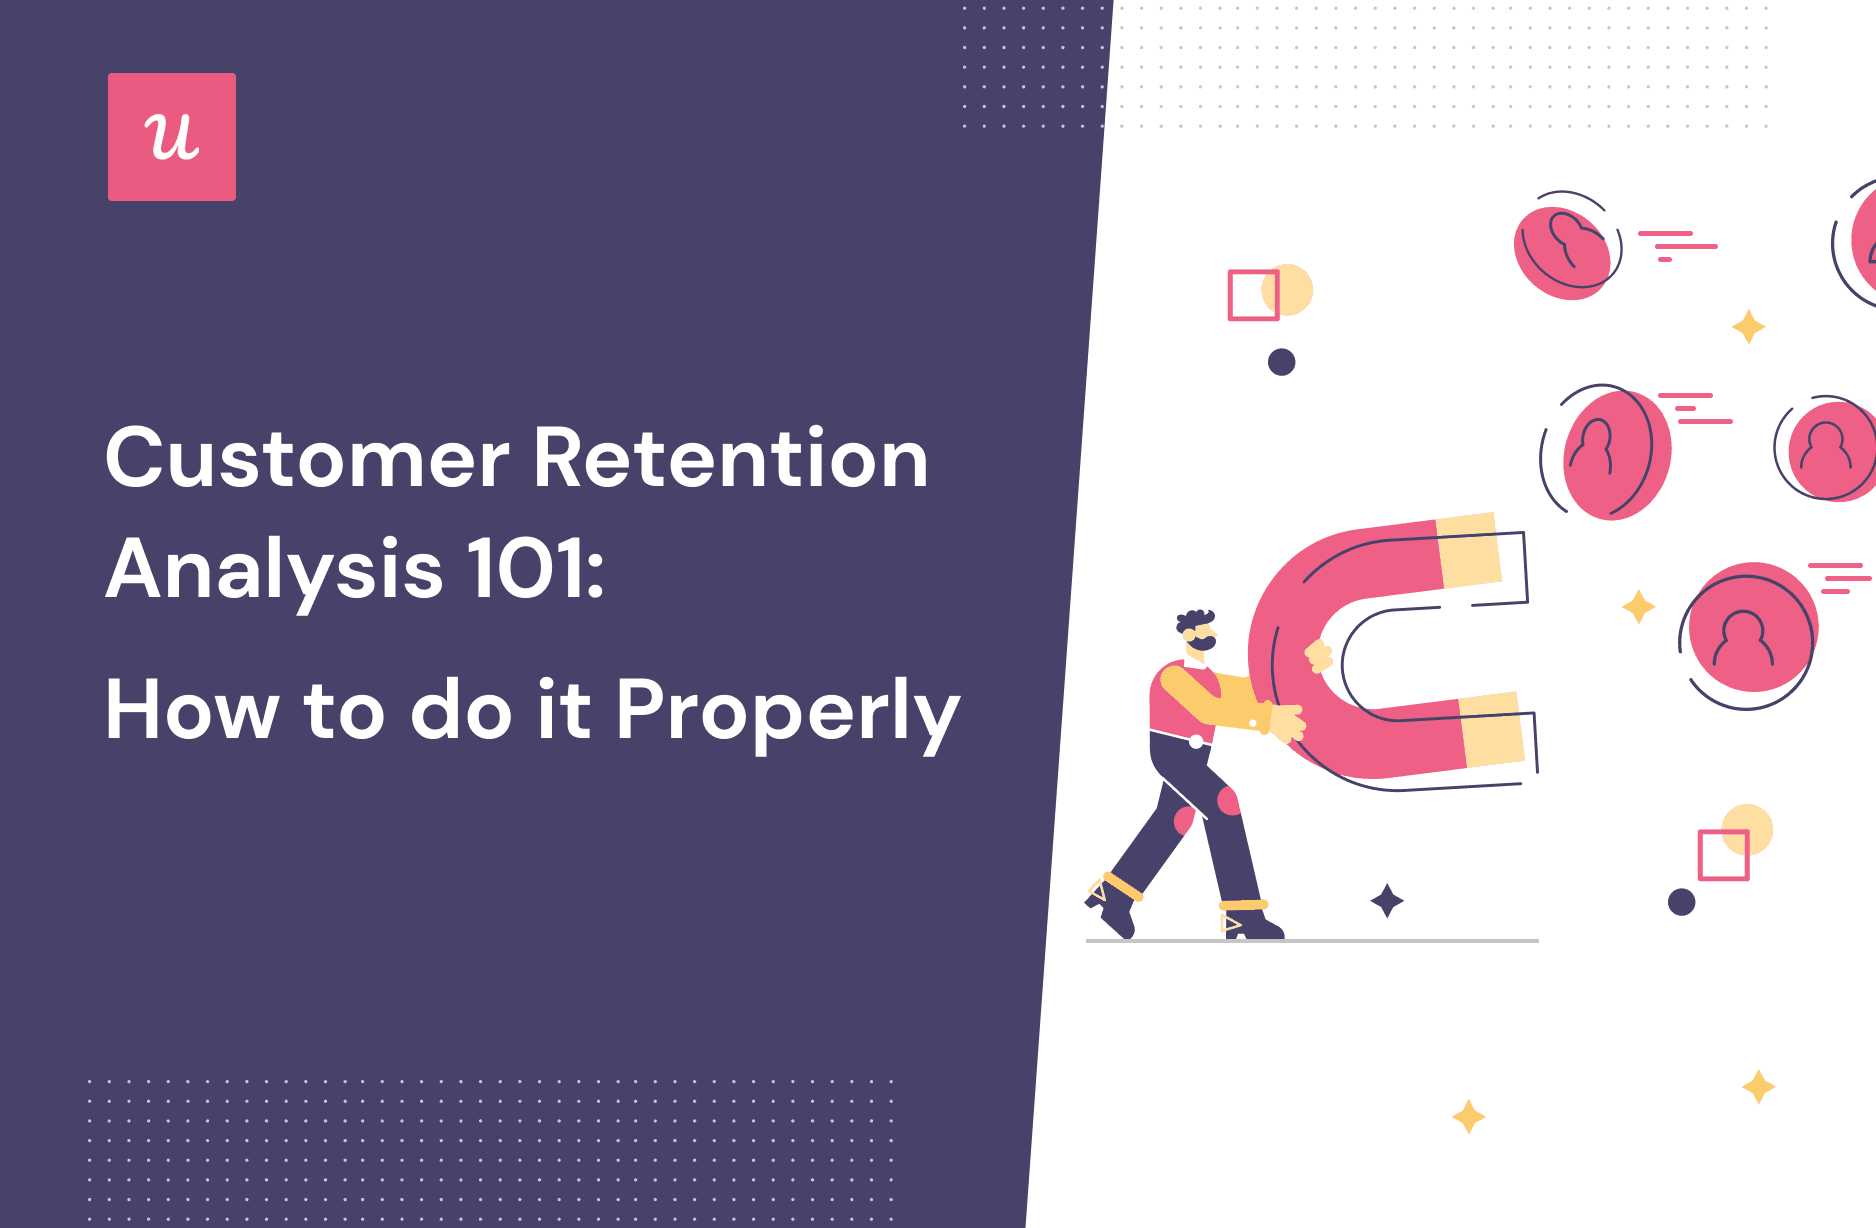 Customer Retention Analysis 101: How to do it Properly